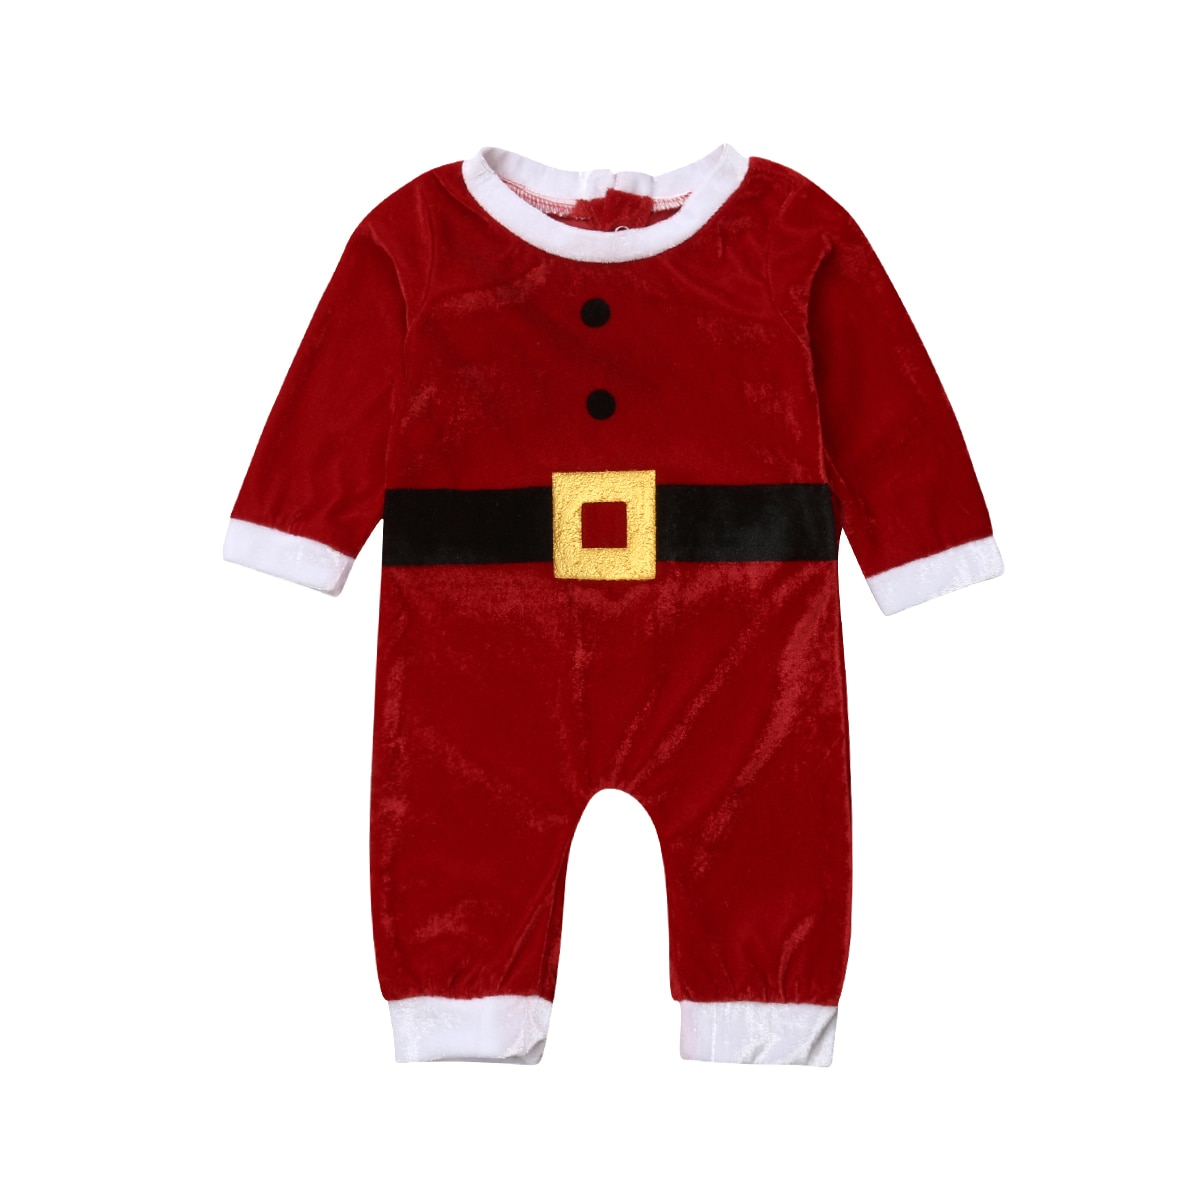 Tegneserie santa claus kostumer til nyfødte baby drenge piger jul spædbarn baby drenge romper jumpsuit legedragt xmas festtøj